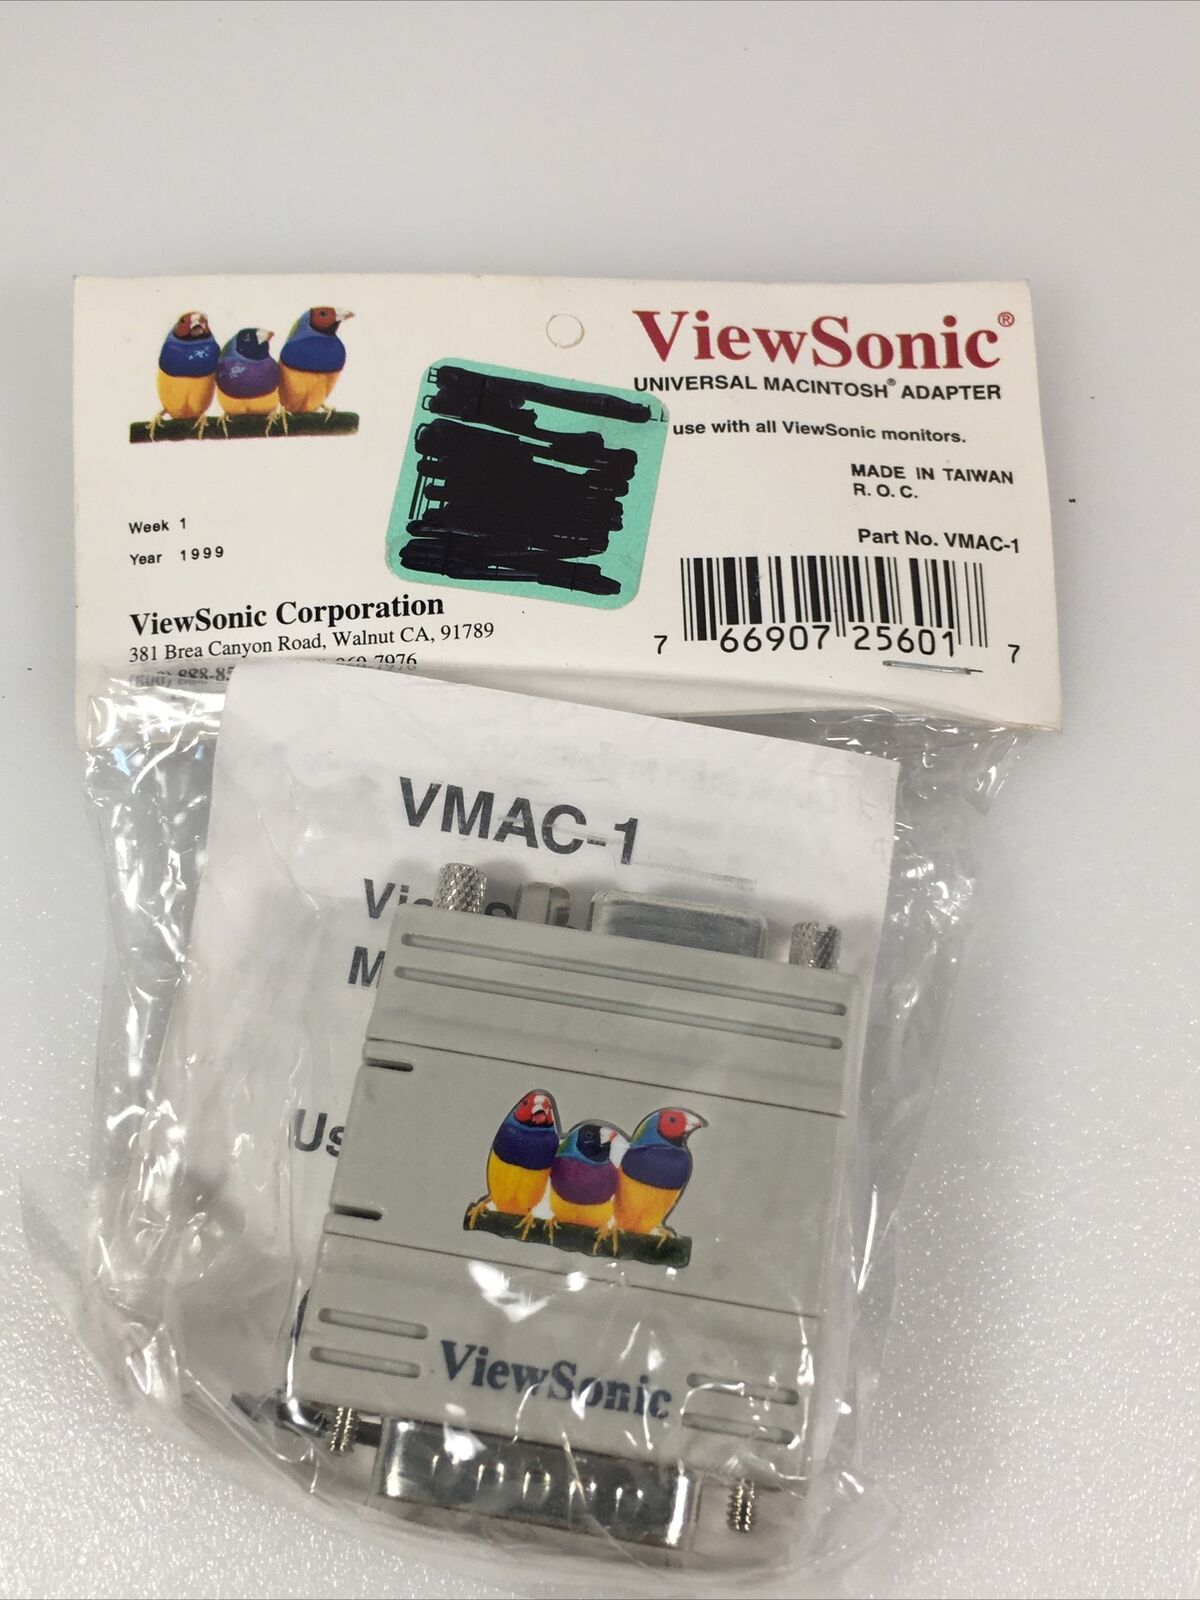 ViewSonic Apple Macintosh Adapter Universal Use W/ ViewSonic Monitor VMAC-1